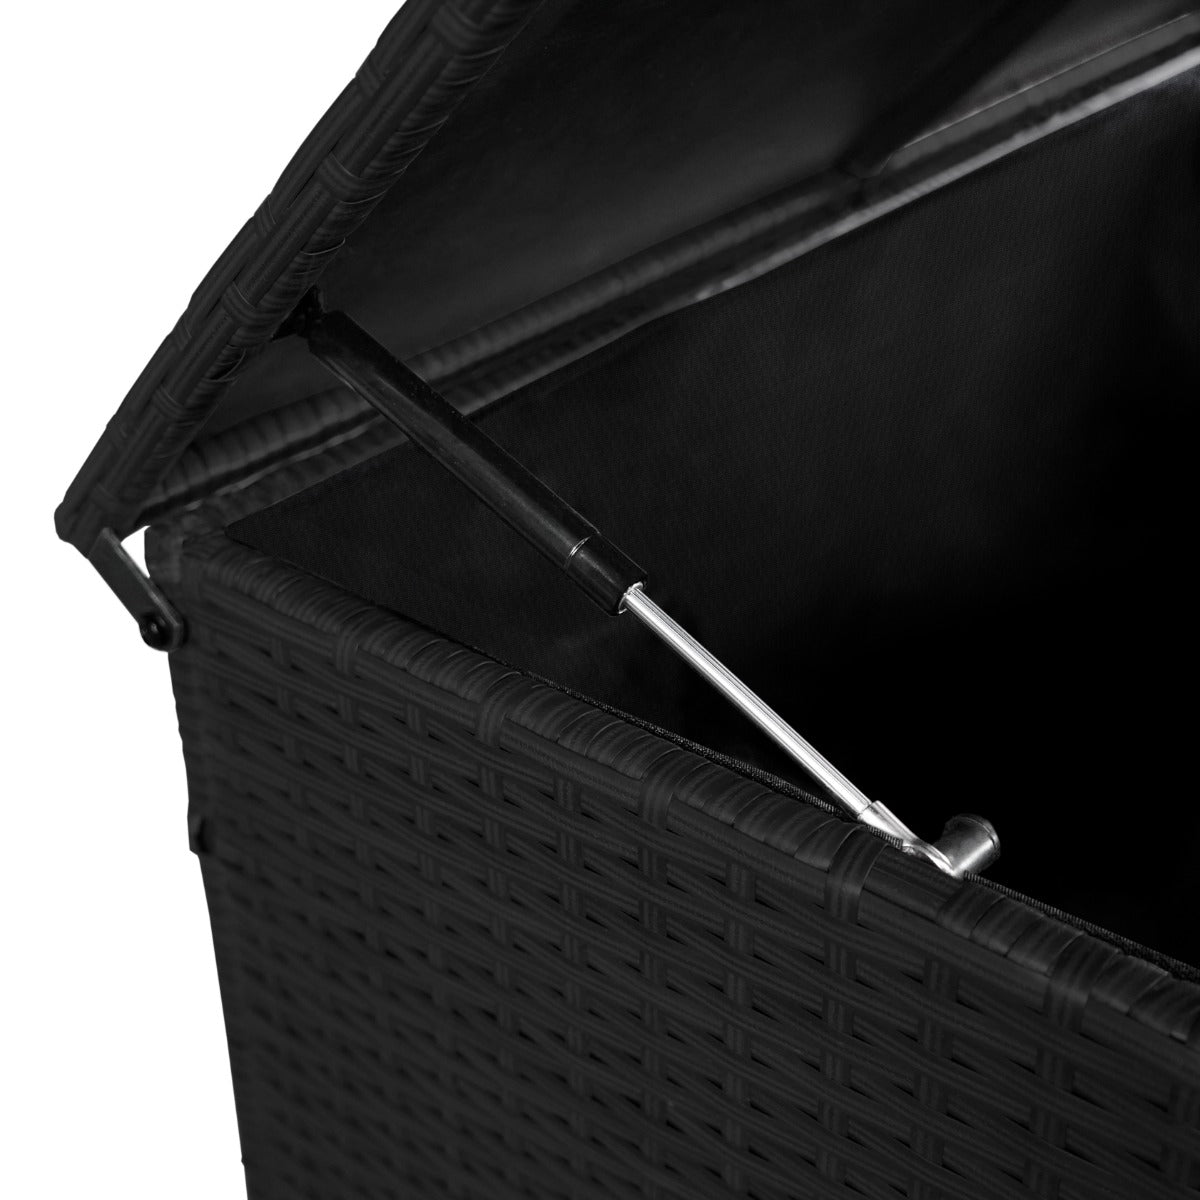 Rattan Cushion Storage Box - Black